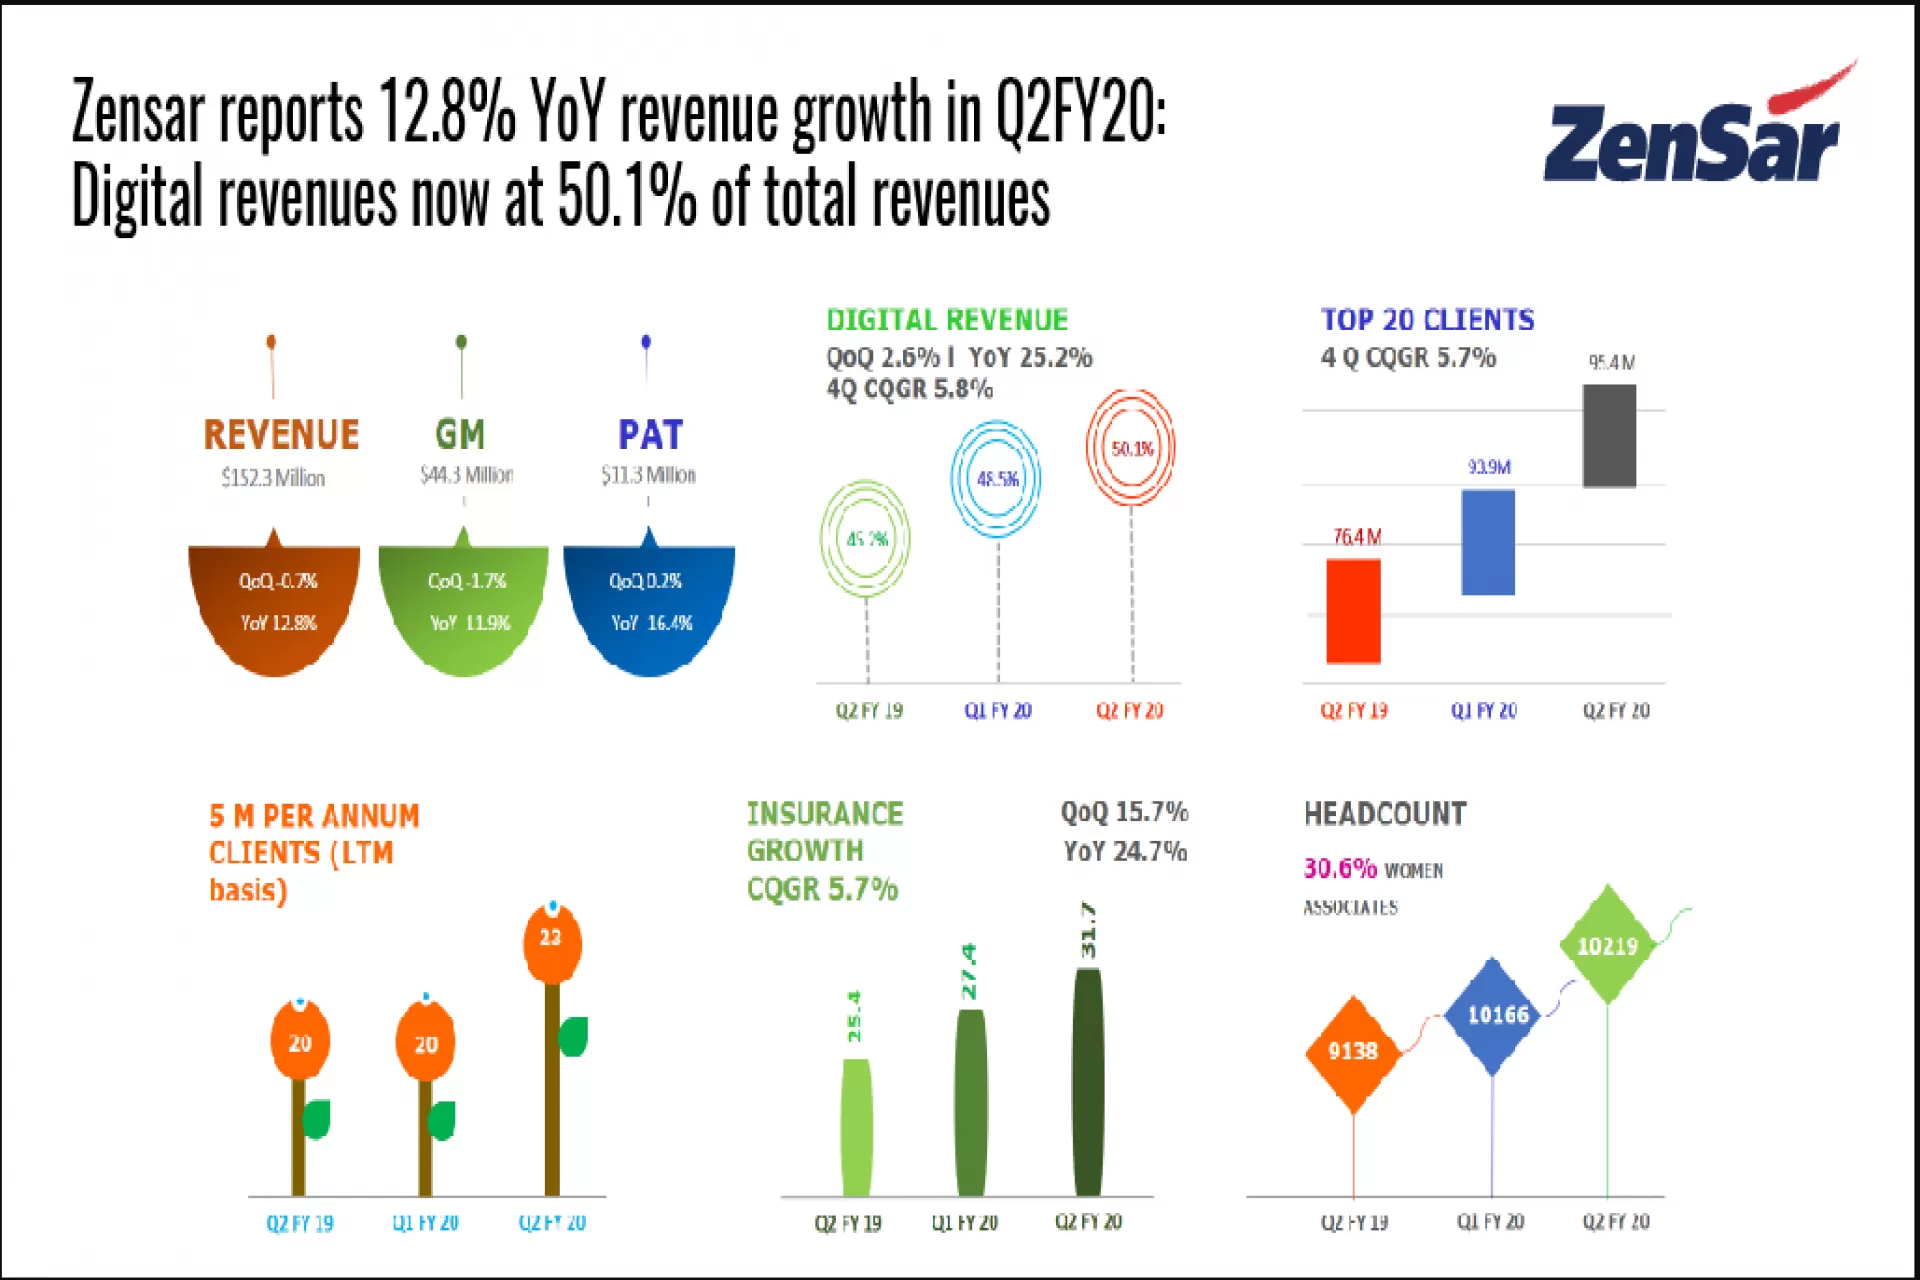 Zensar reports 12.8% YoY revenue growth in Q2FY20